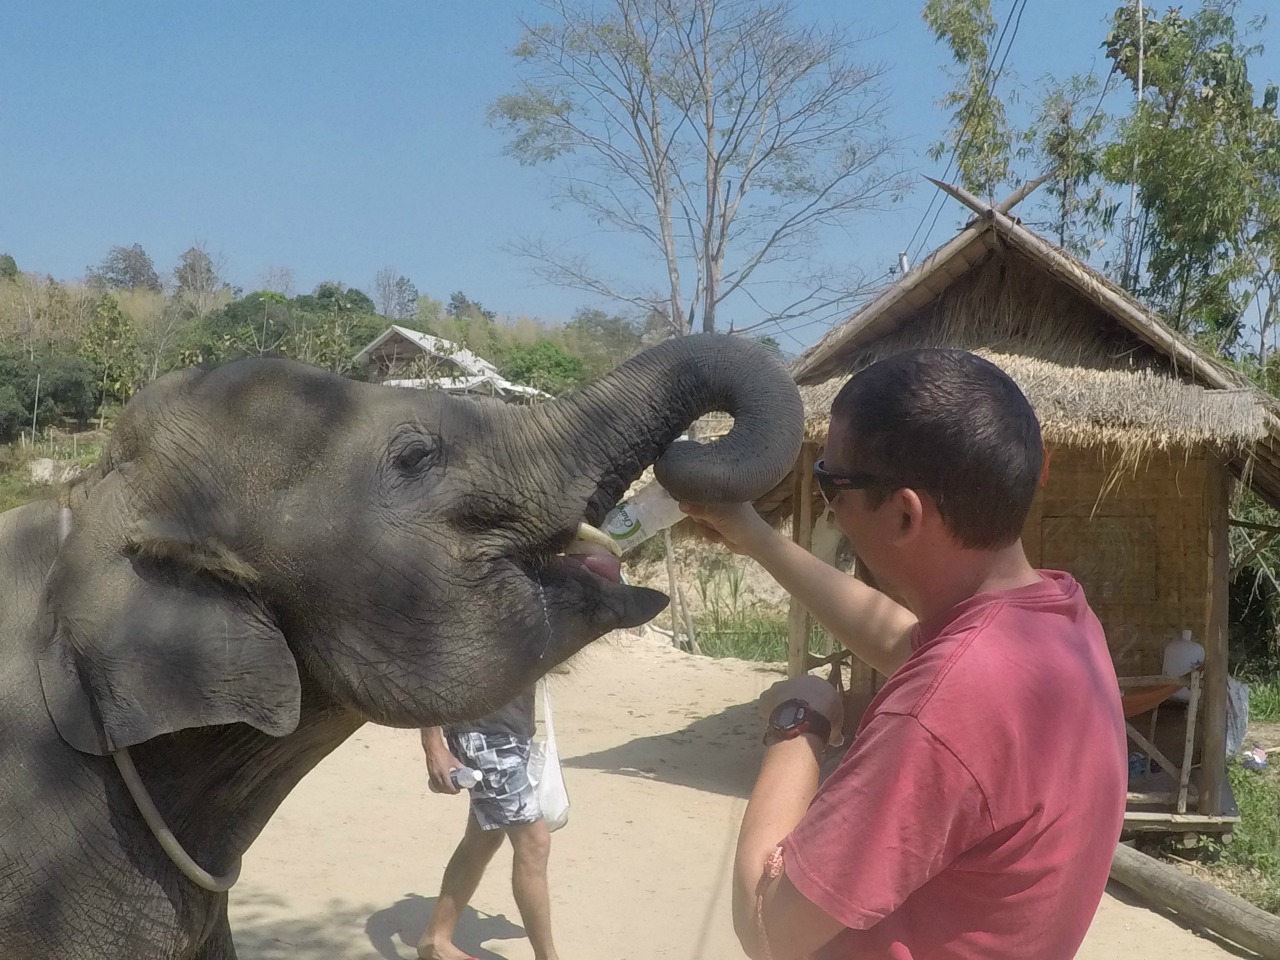 Joel feeding a baby elephant a bottle